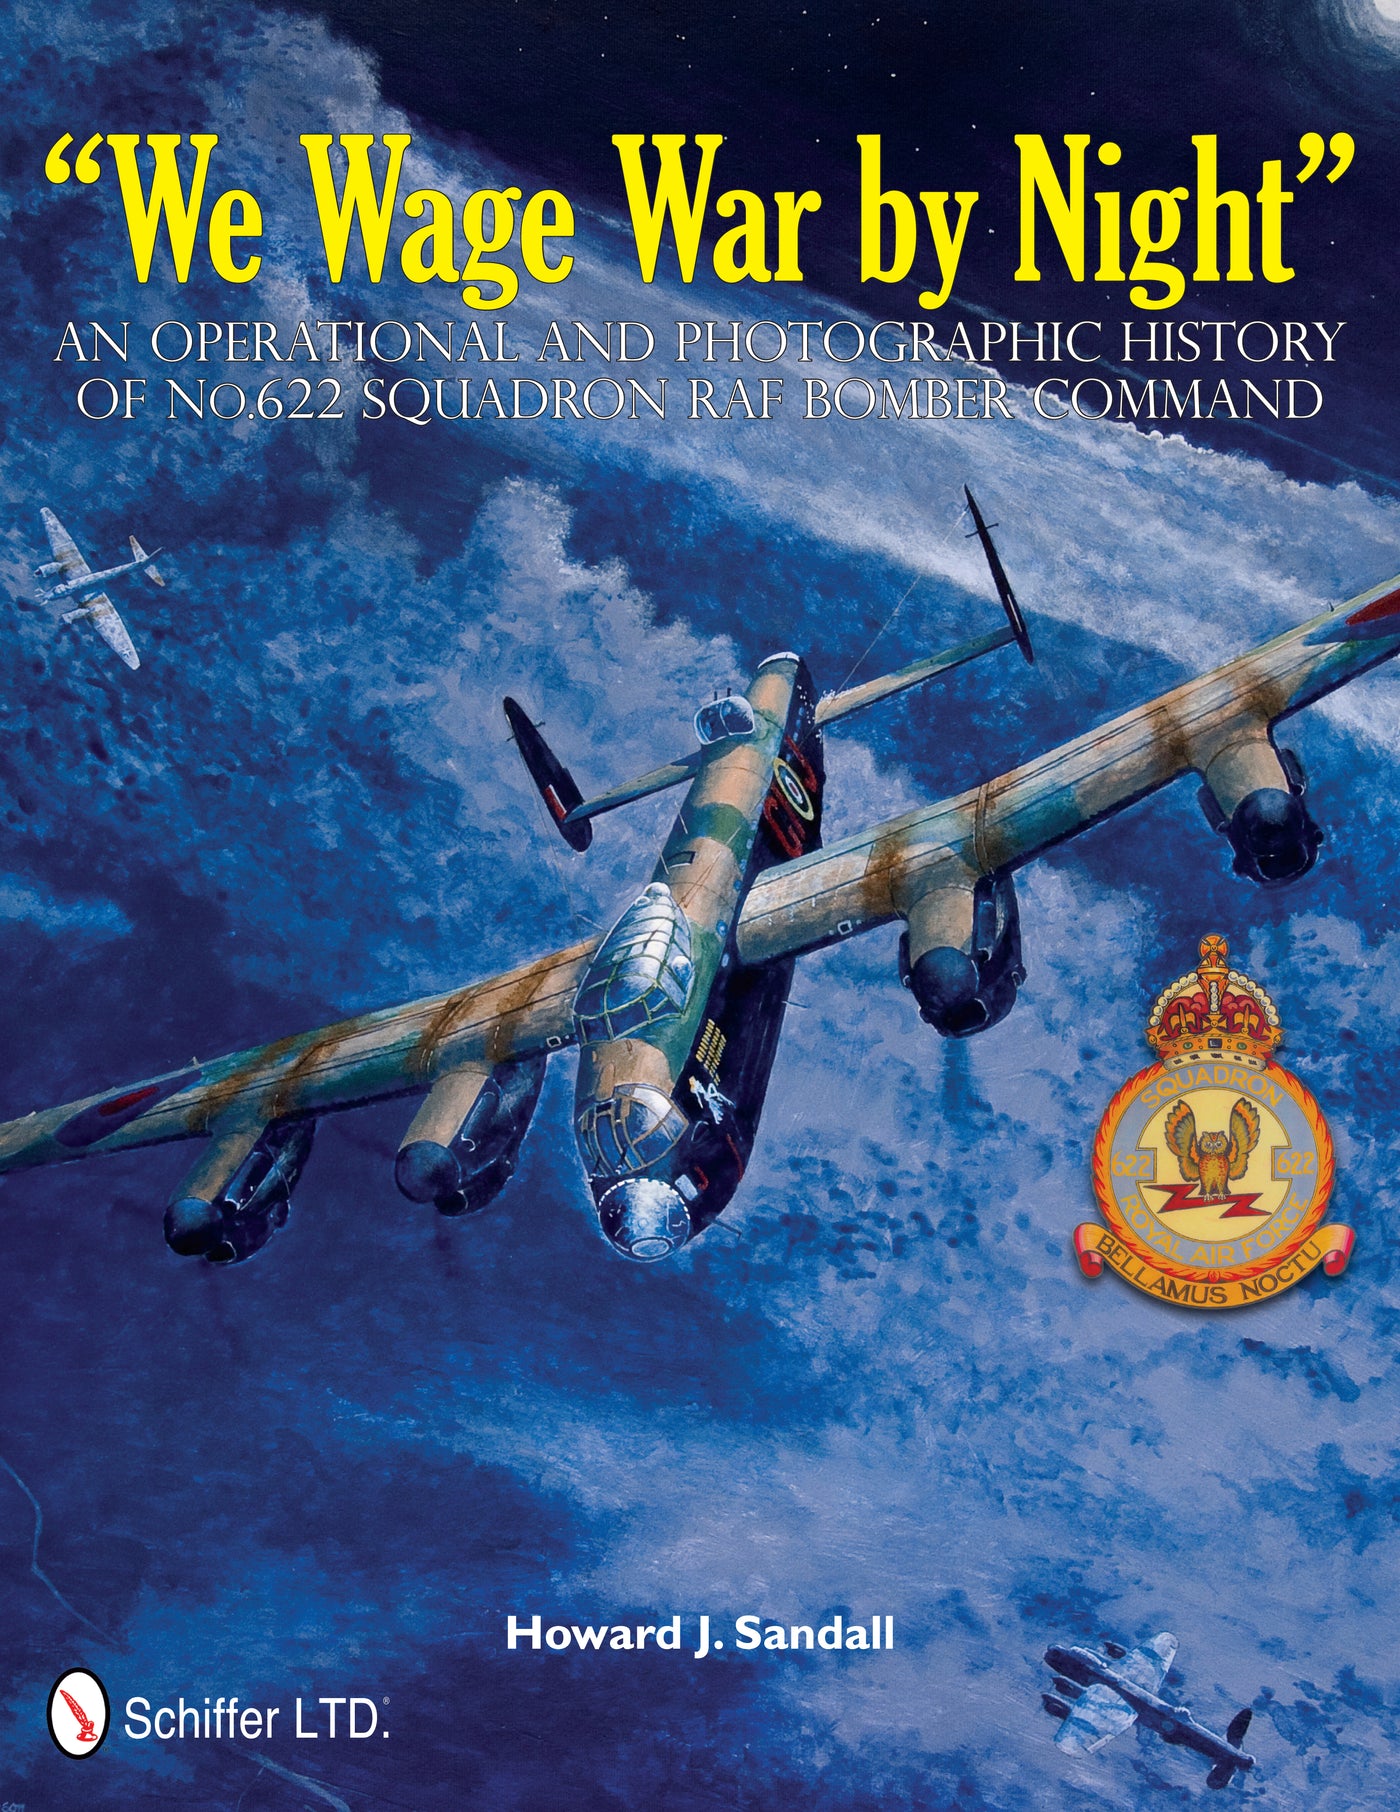 "We Wage War by Night"